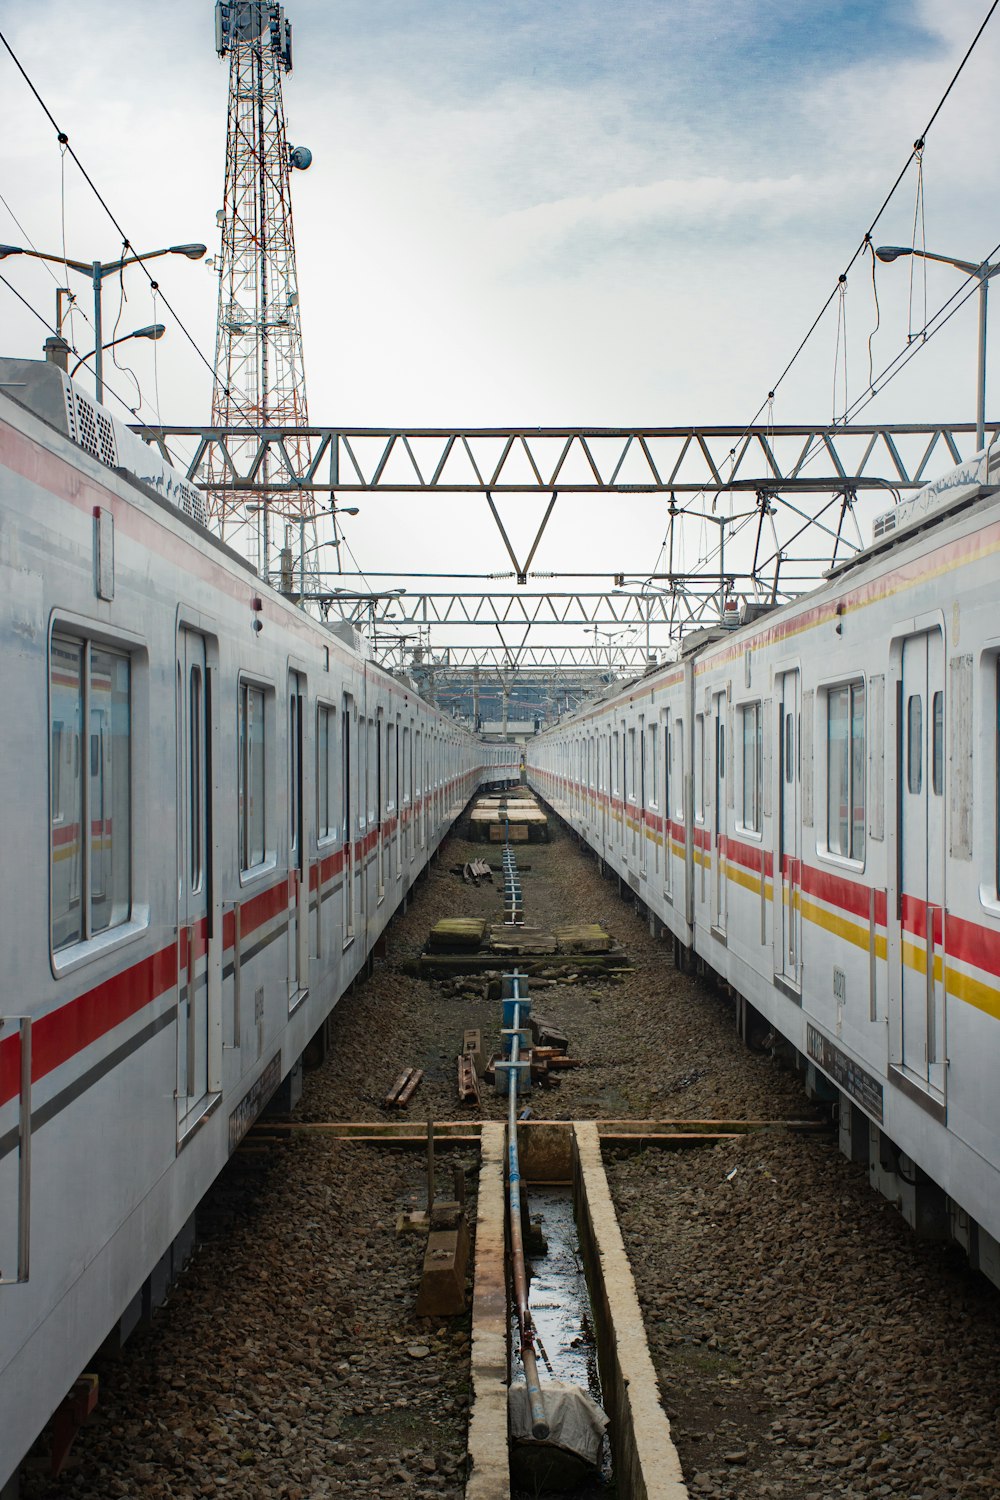 trains on the railway tracks